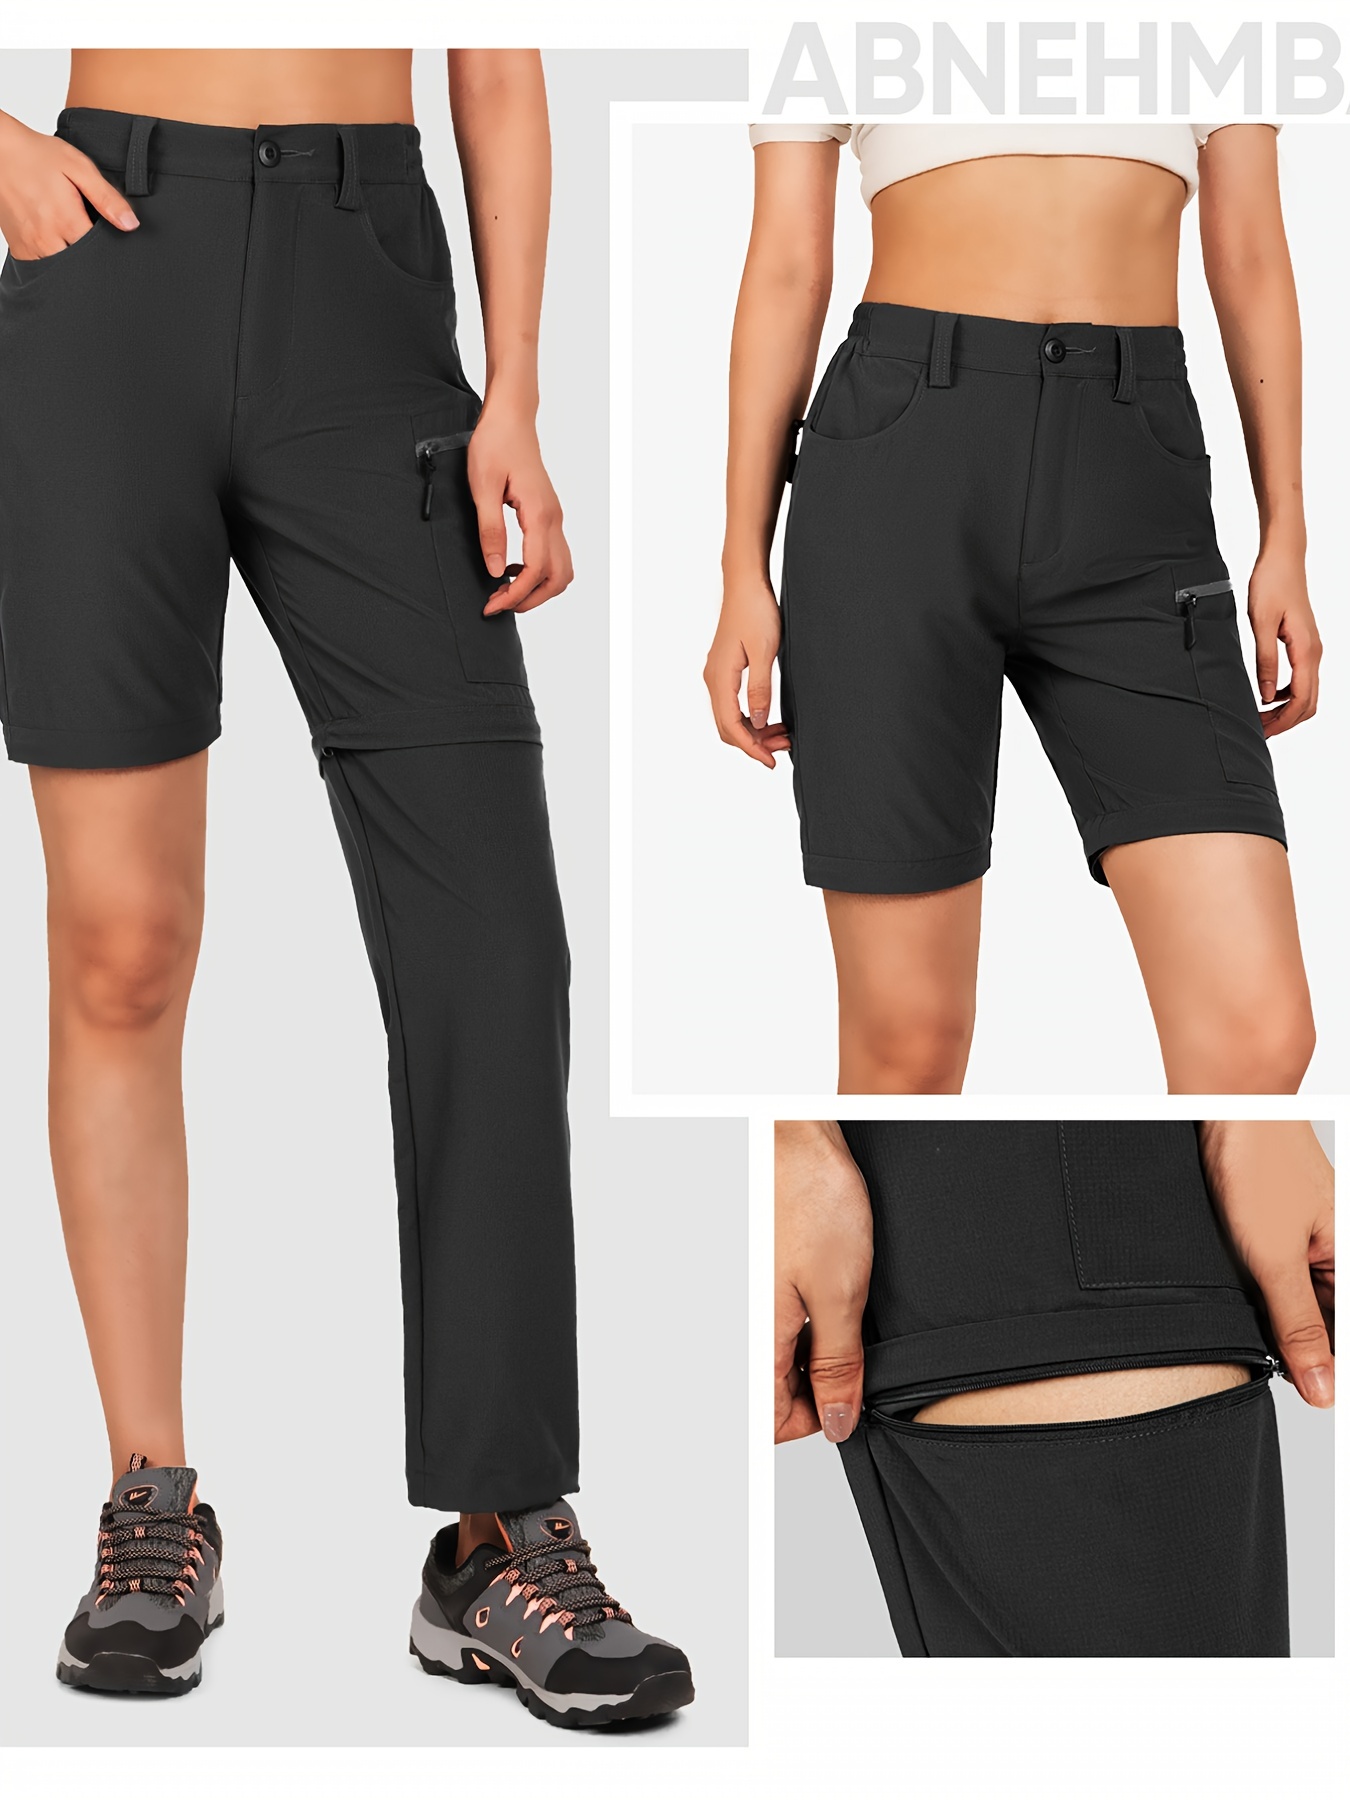 Eastern Mountain Sports Convertible Pants Women’s 4 Gray Hiking Walking  Shorts